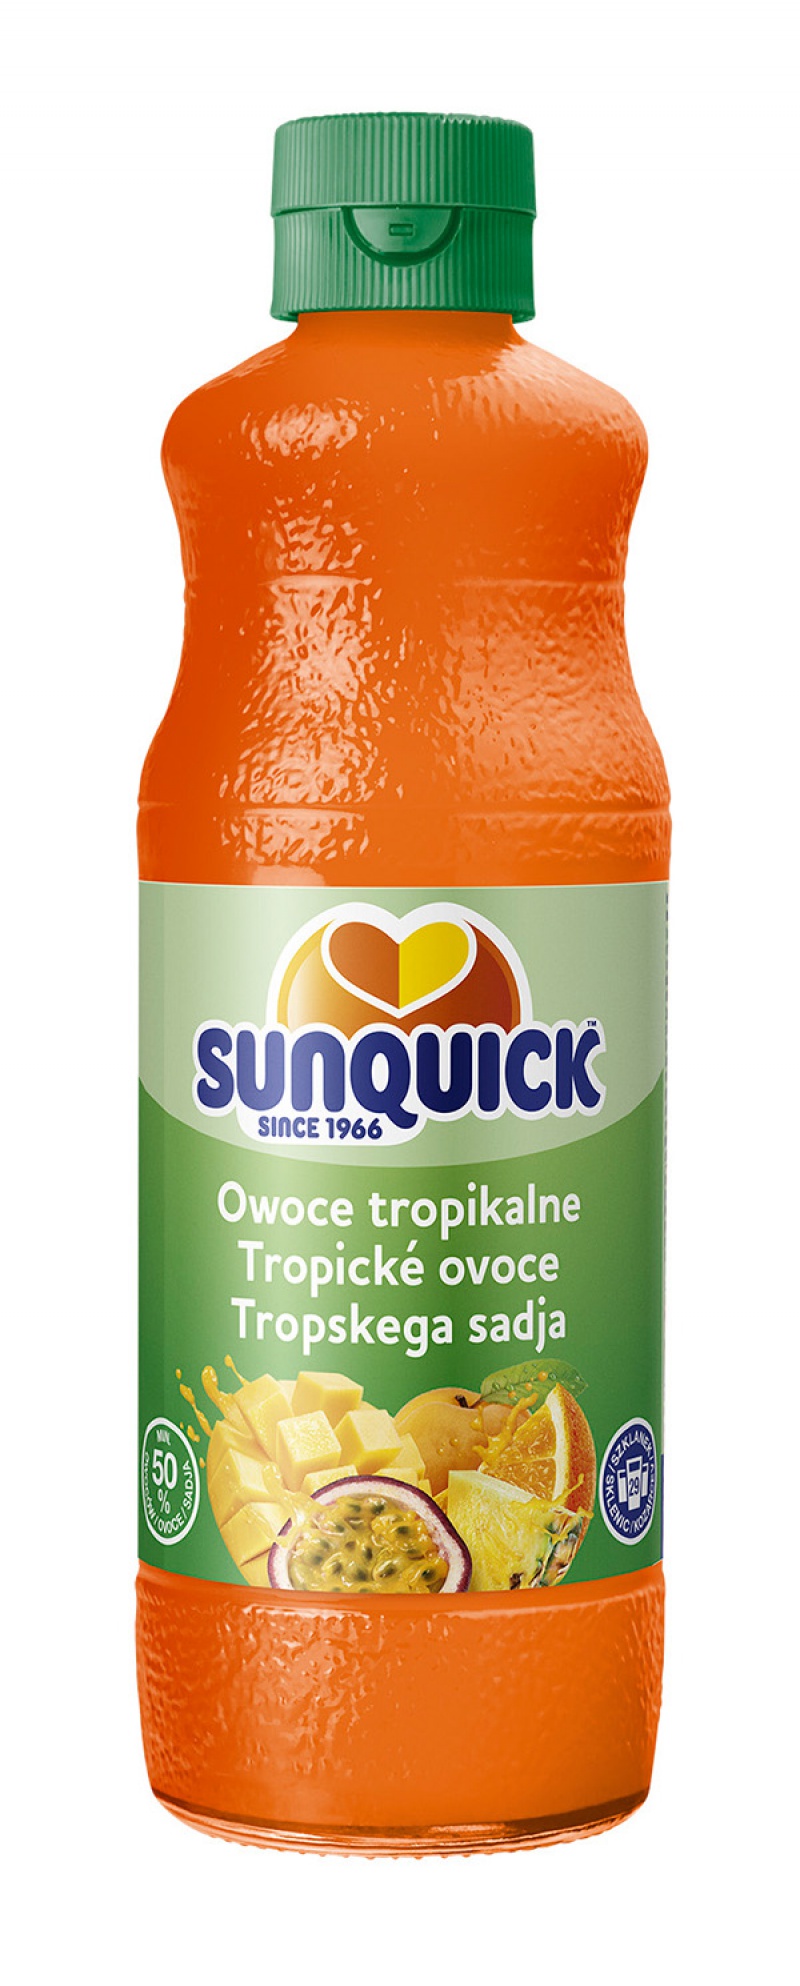 Syrop SUNQUICK, 580ml, owoce tropikalne